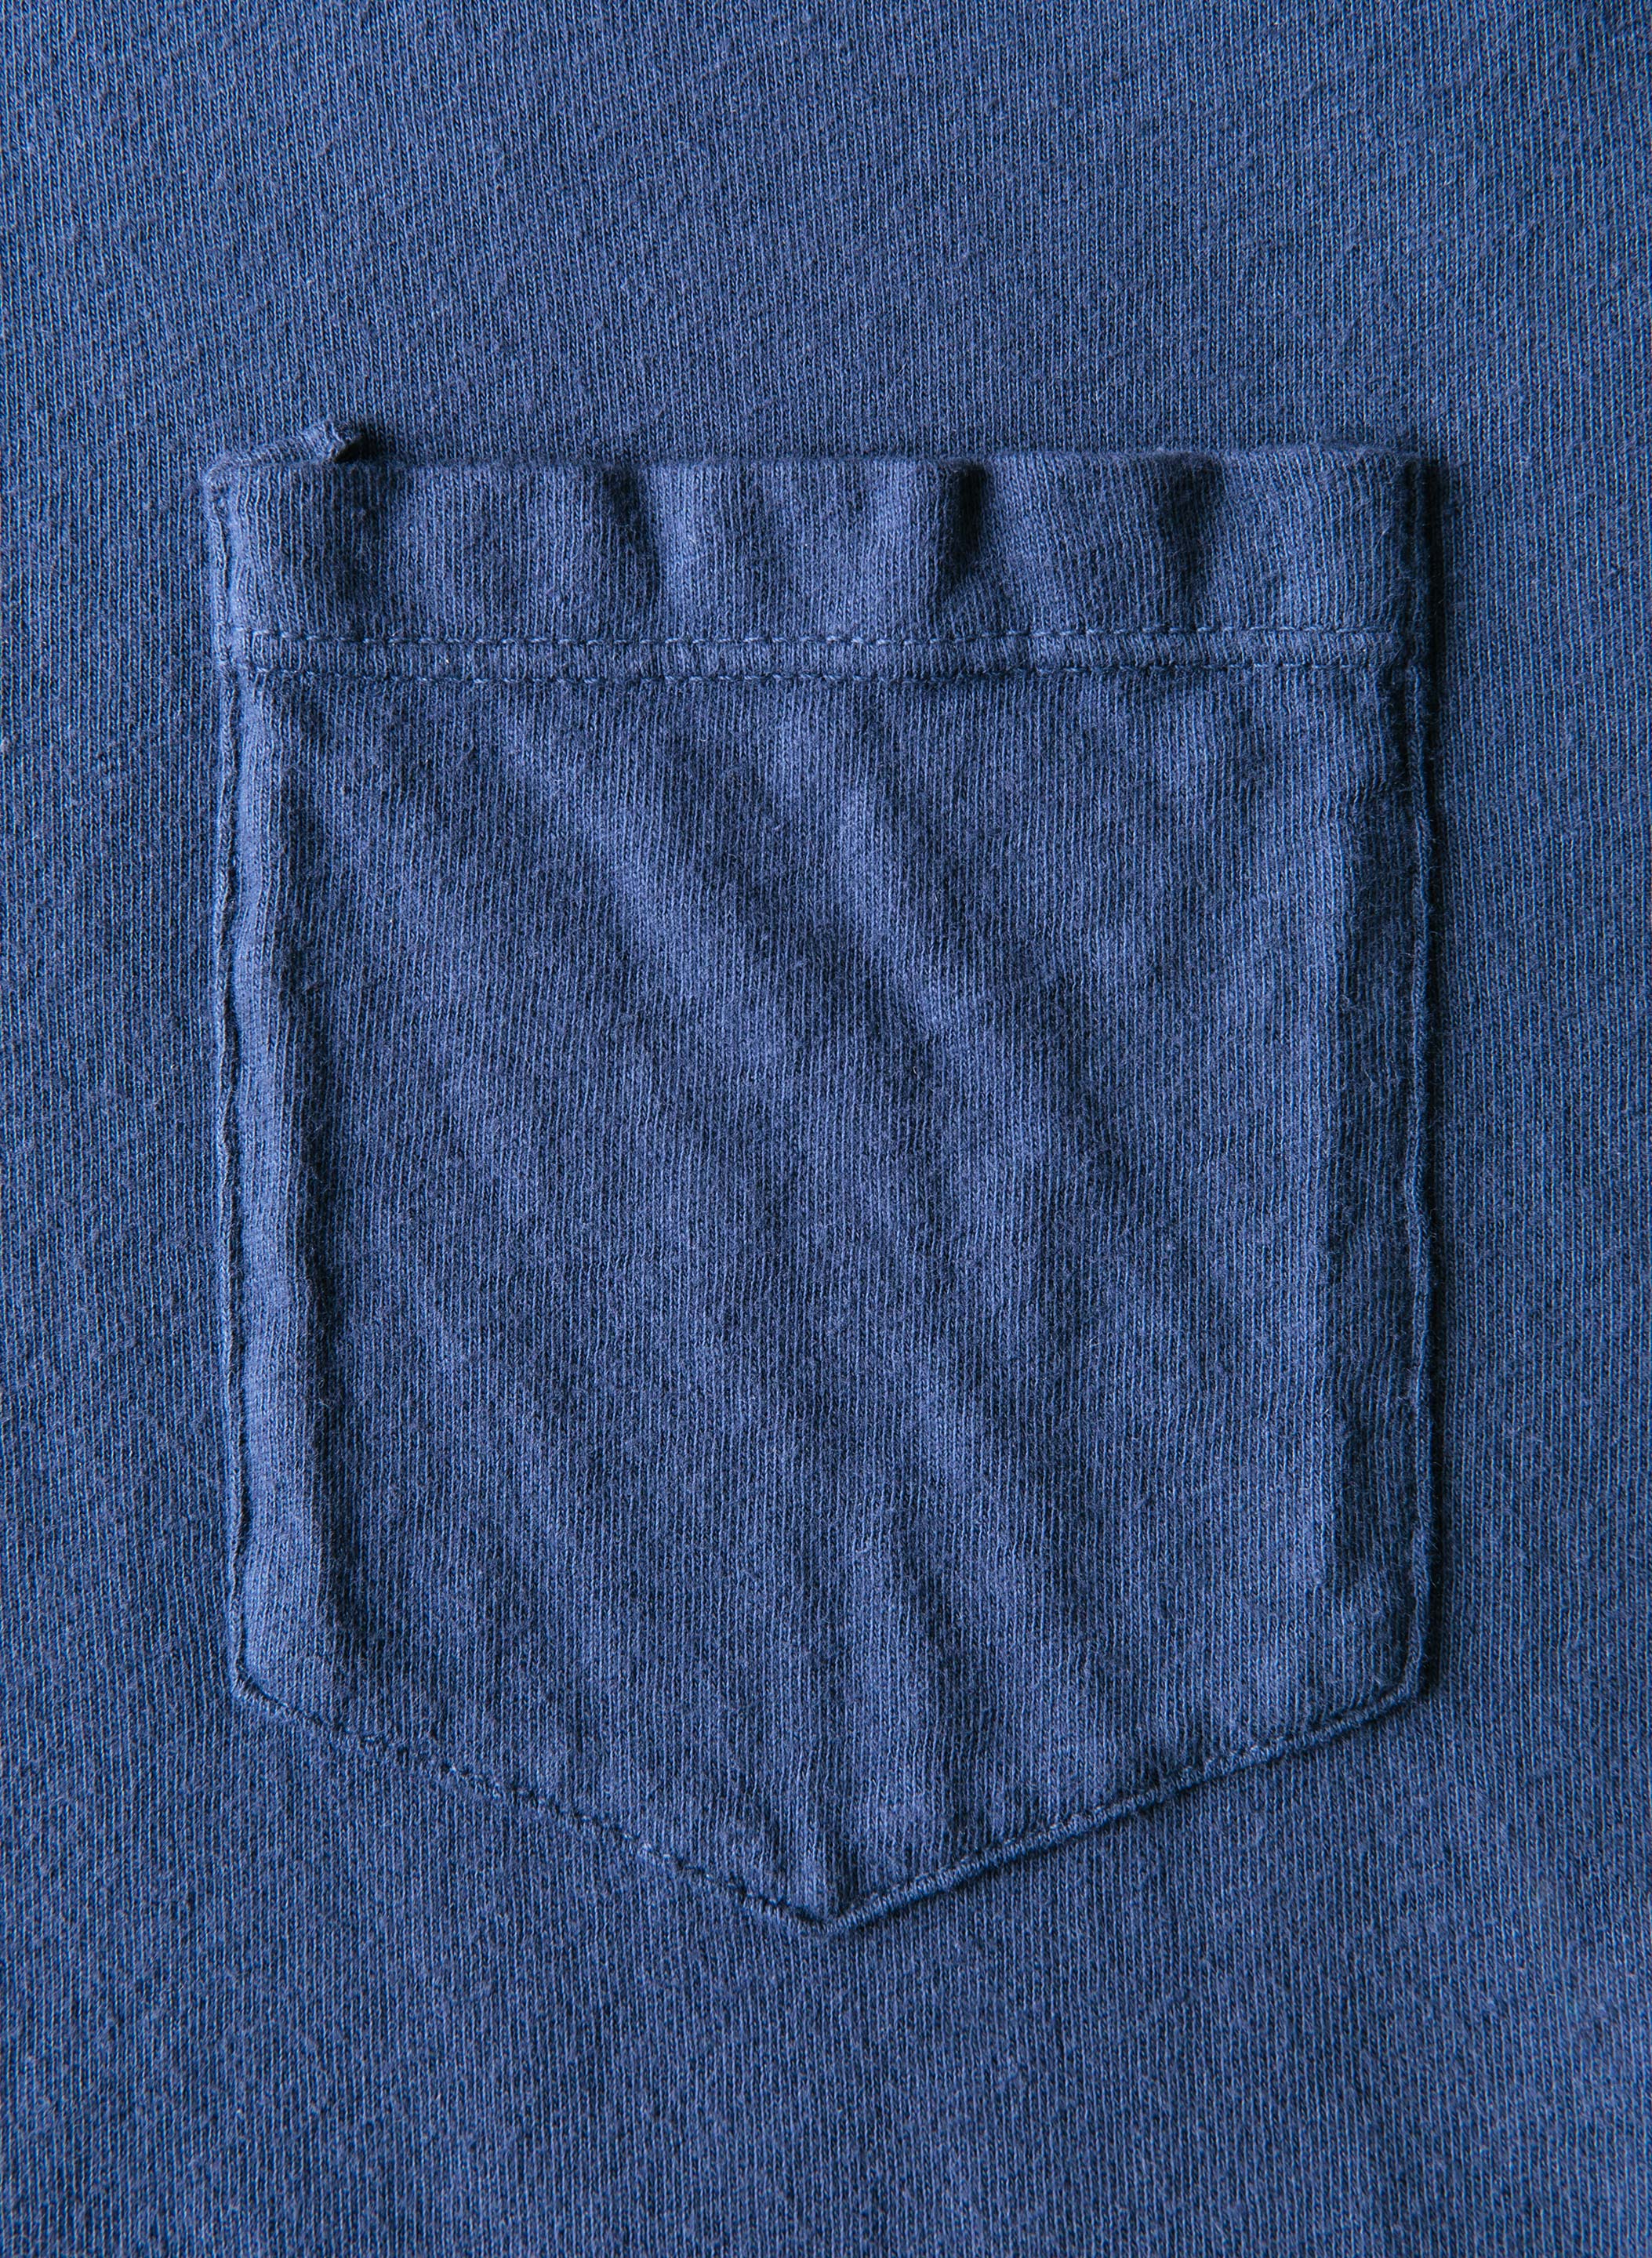 imogene + willie - faded blue knit pocket tee